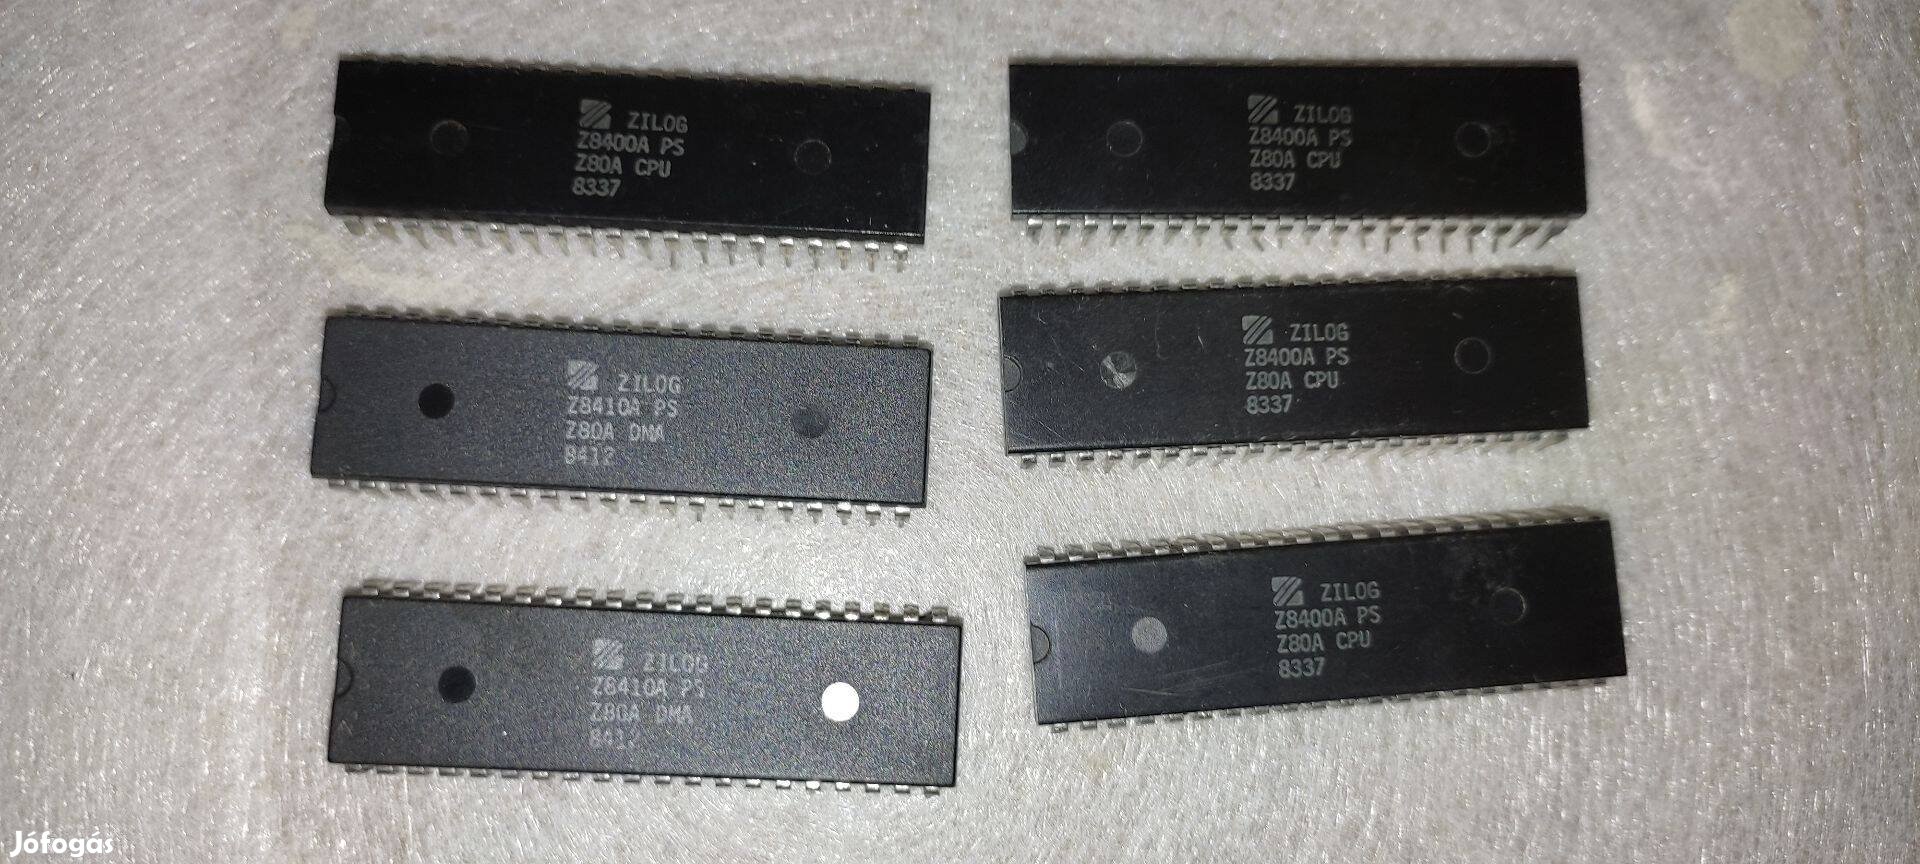 CPU Z80A Zilog Eladó